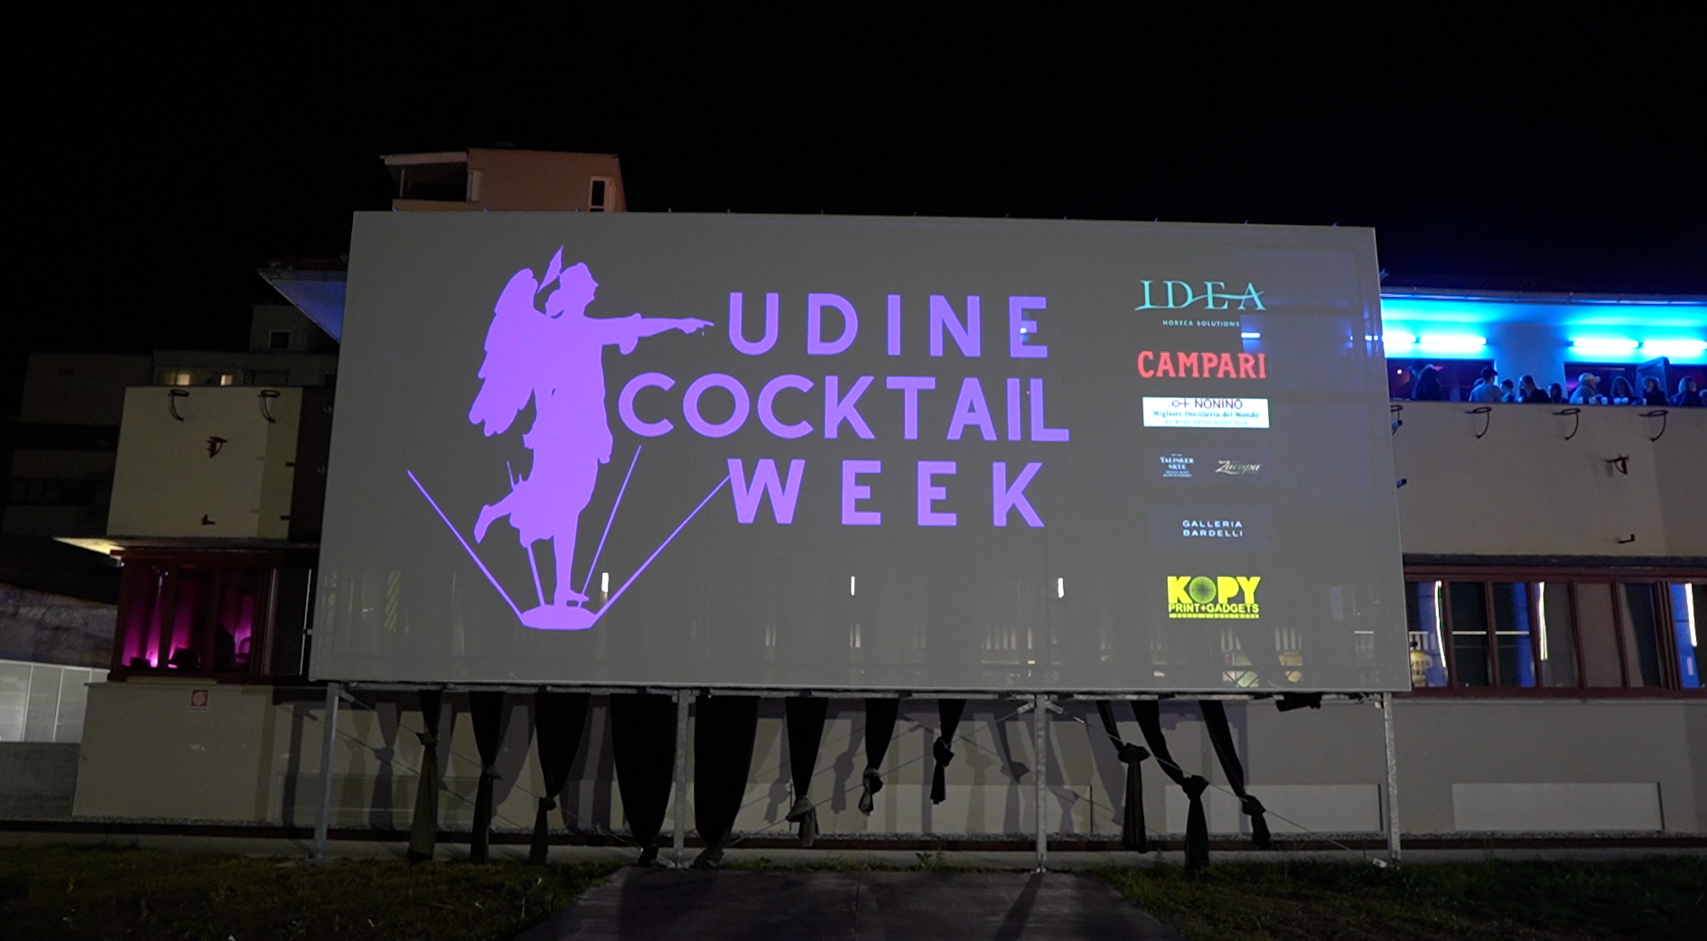 Udine Cocktail Week